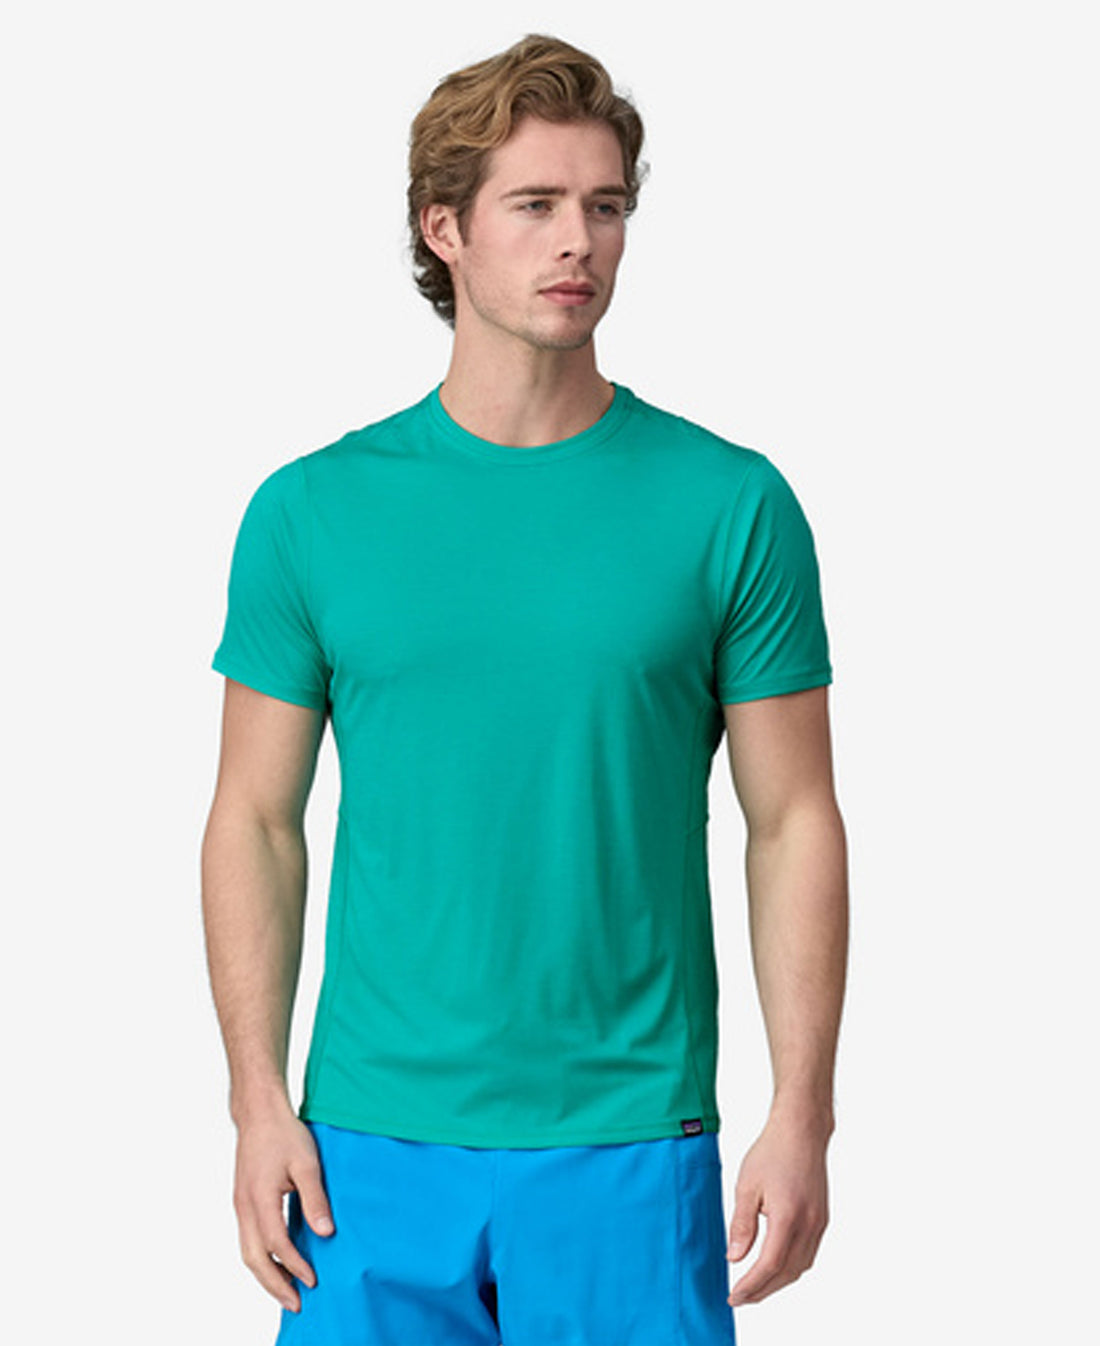 Cap Cool Lightweight Shirt - Subtidal Blue-Light Subtidal Blue X